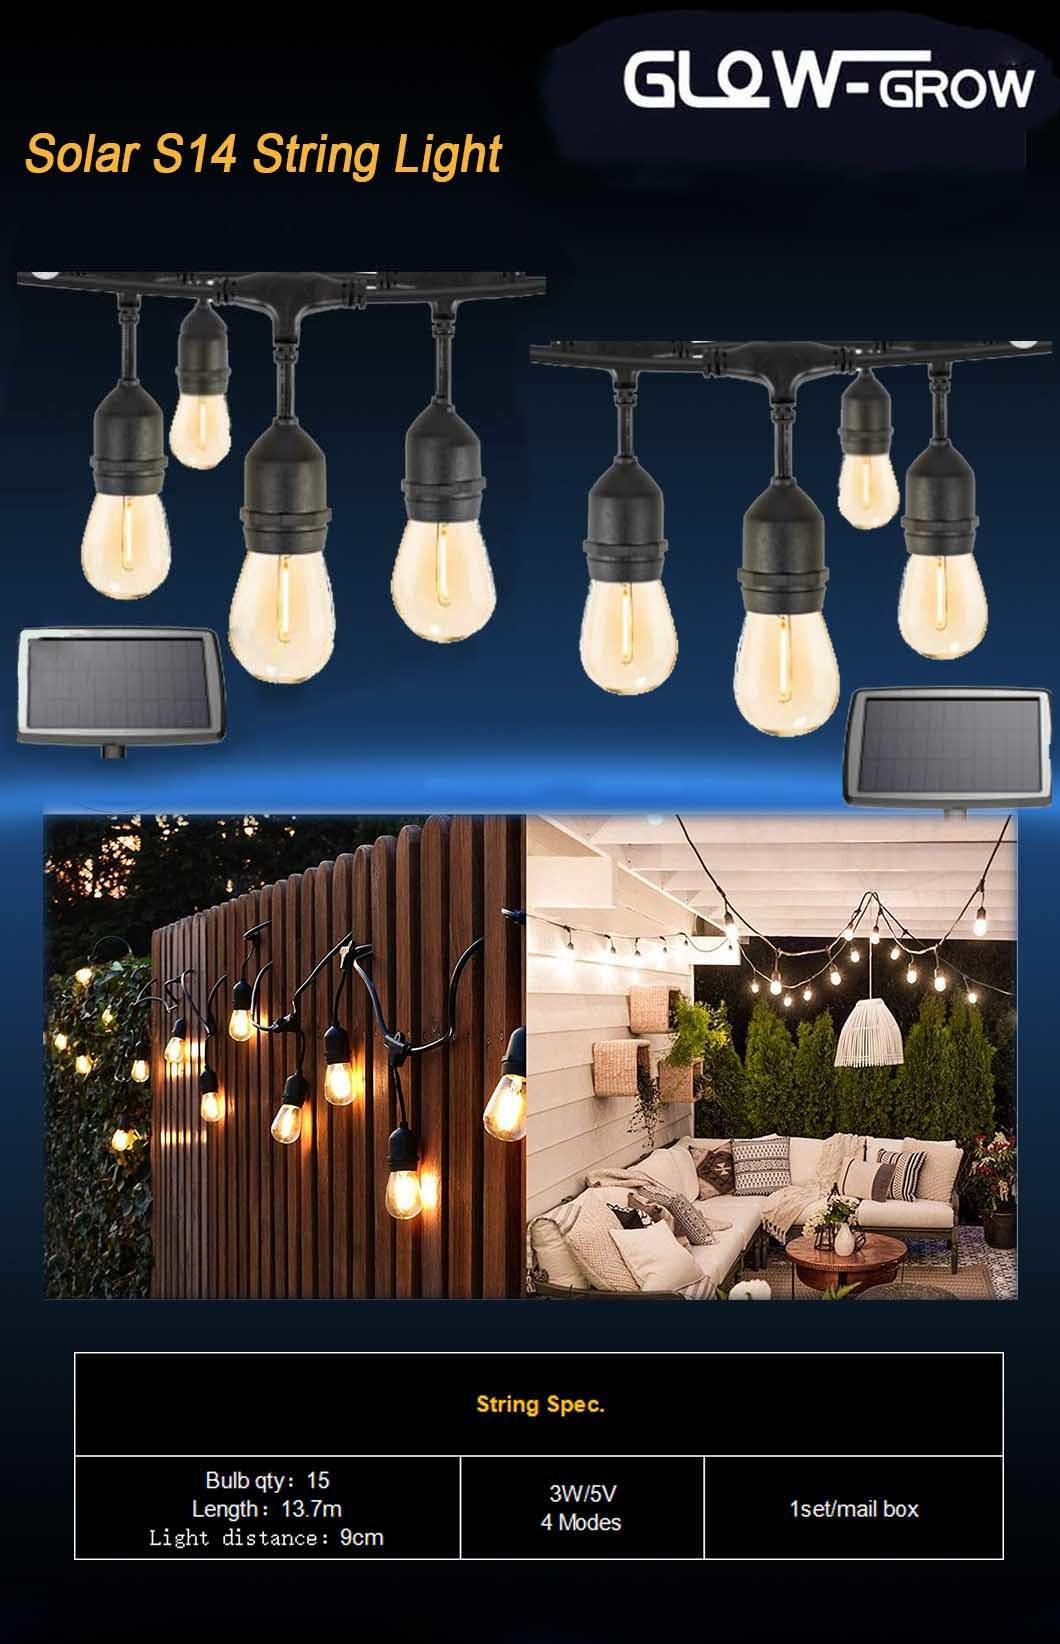 Waterproof Solar Powered Bulb String Lights for Garden Decoration